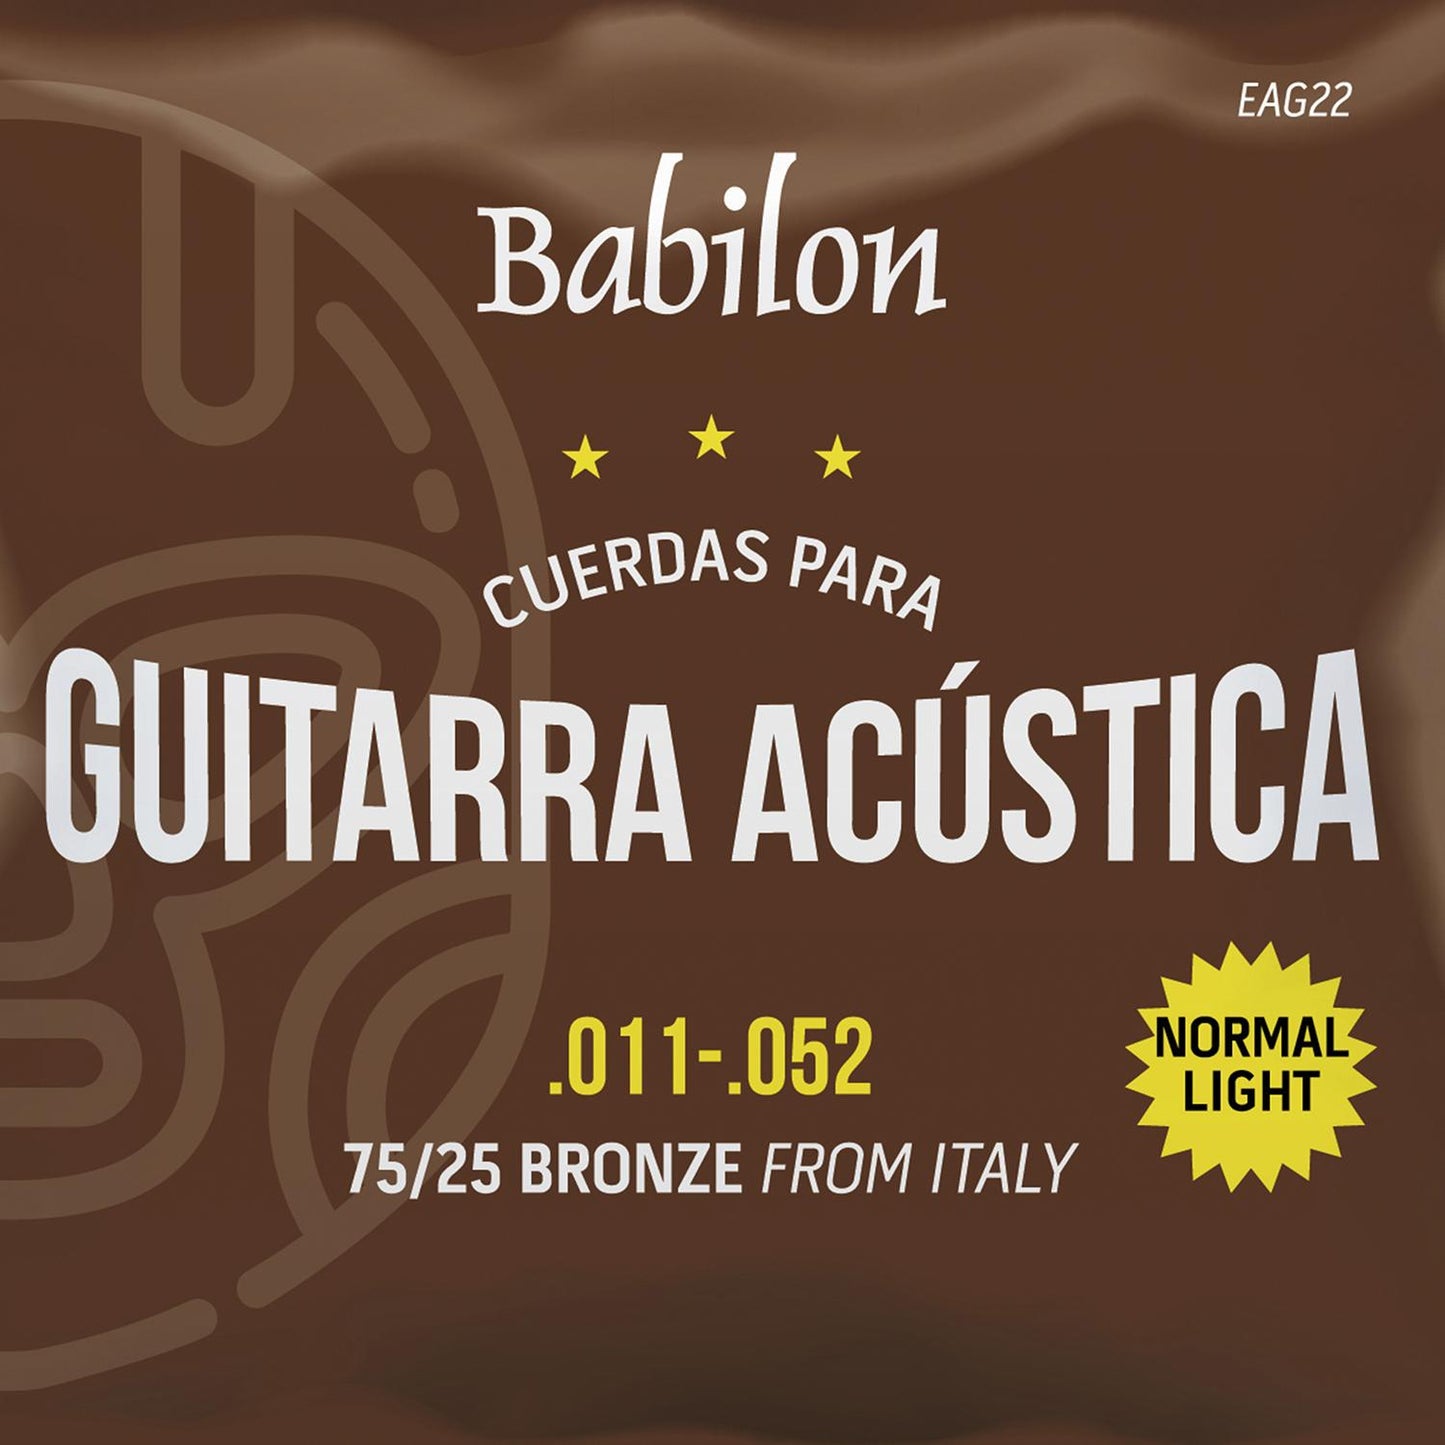 Set de Cuerdas para Guitarra Acústica (0.011-0.052) 75/25 EAG-22/011 BABILON